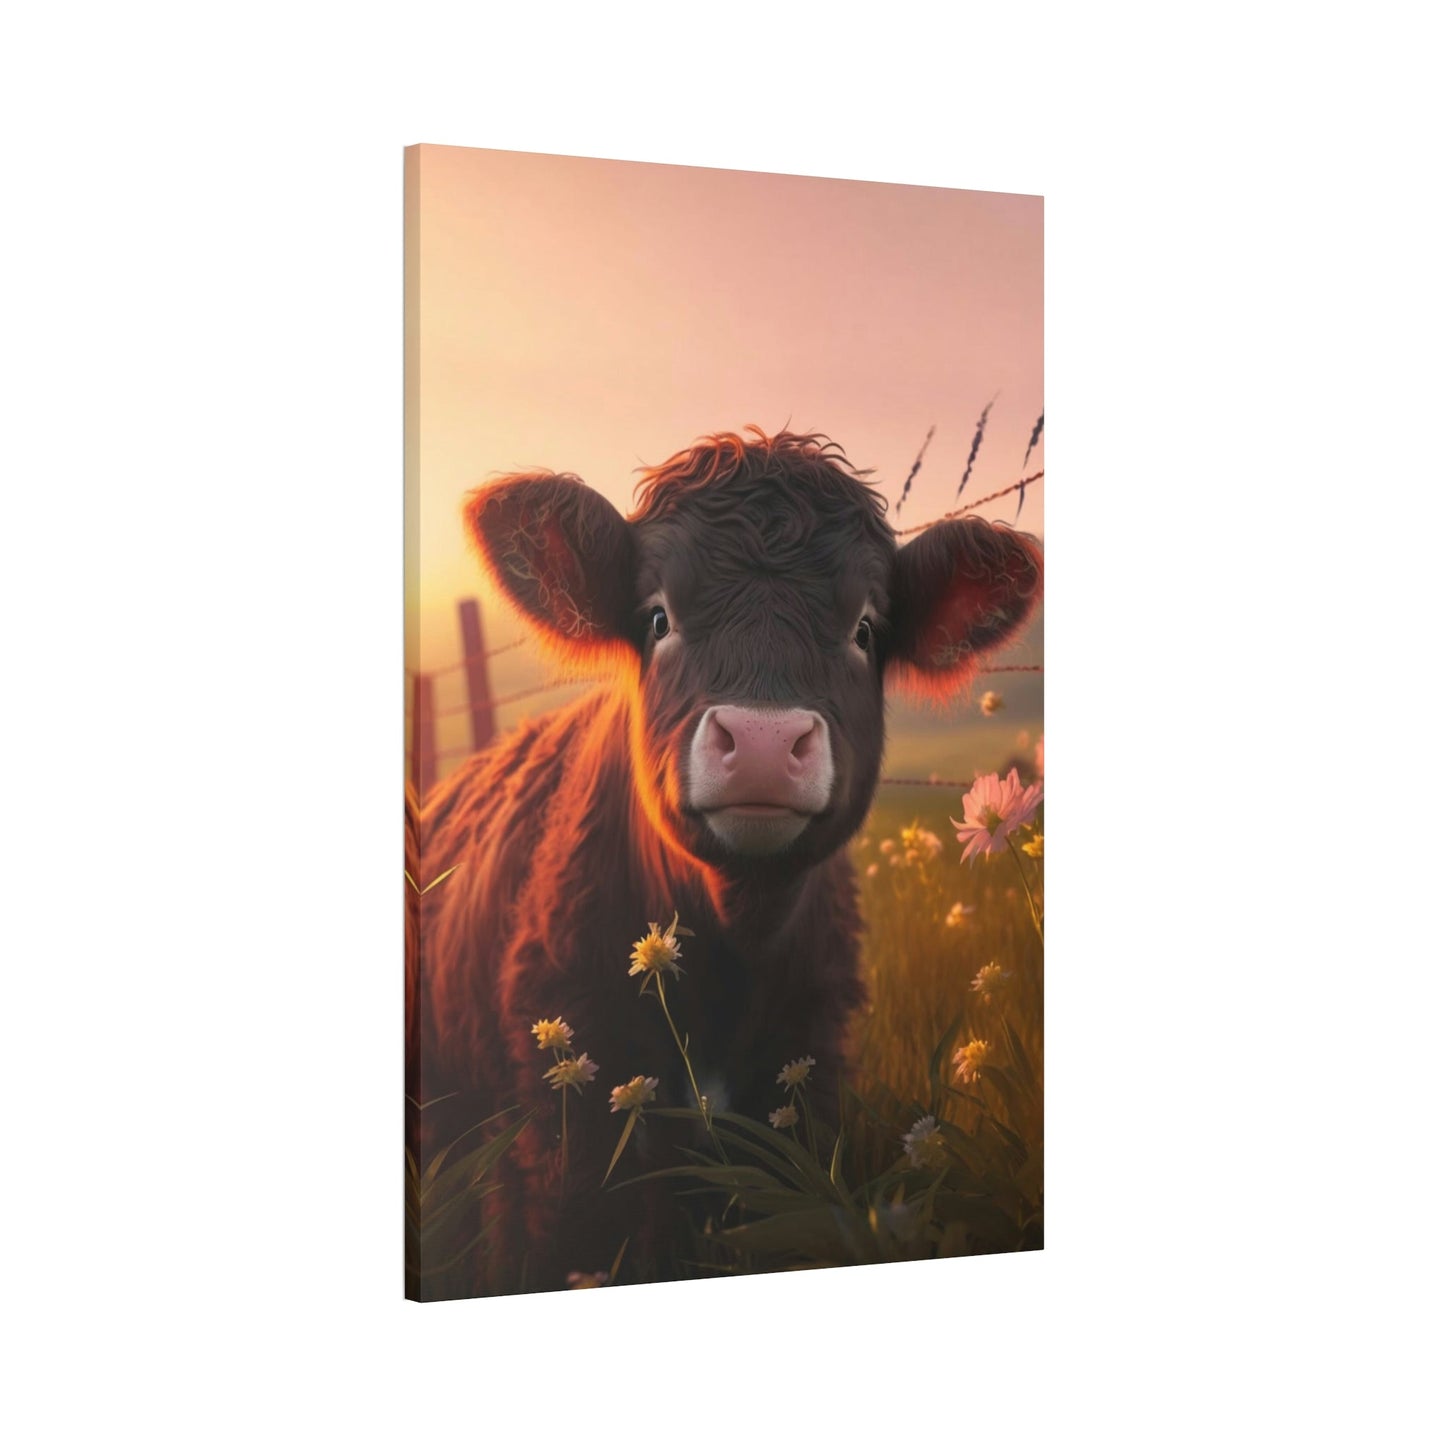 Serene Bovine Beauty: Framed Poster Wall Art Featuring a Stunning Cow Portrait